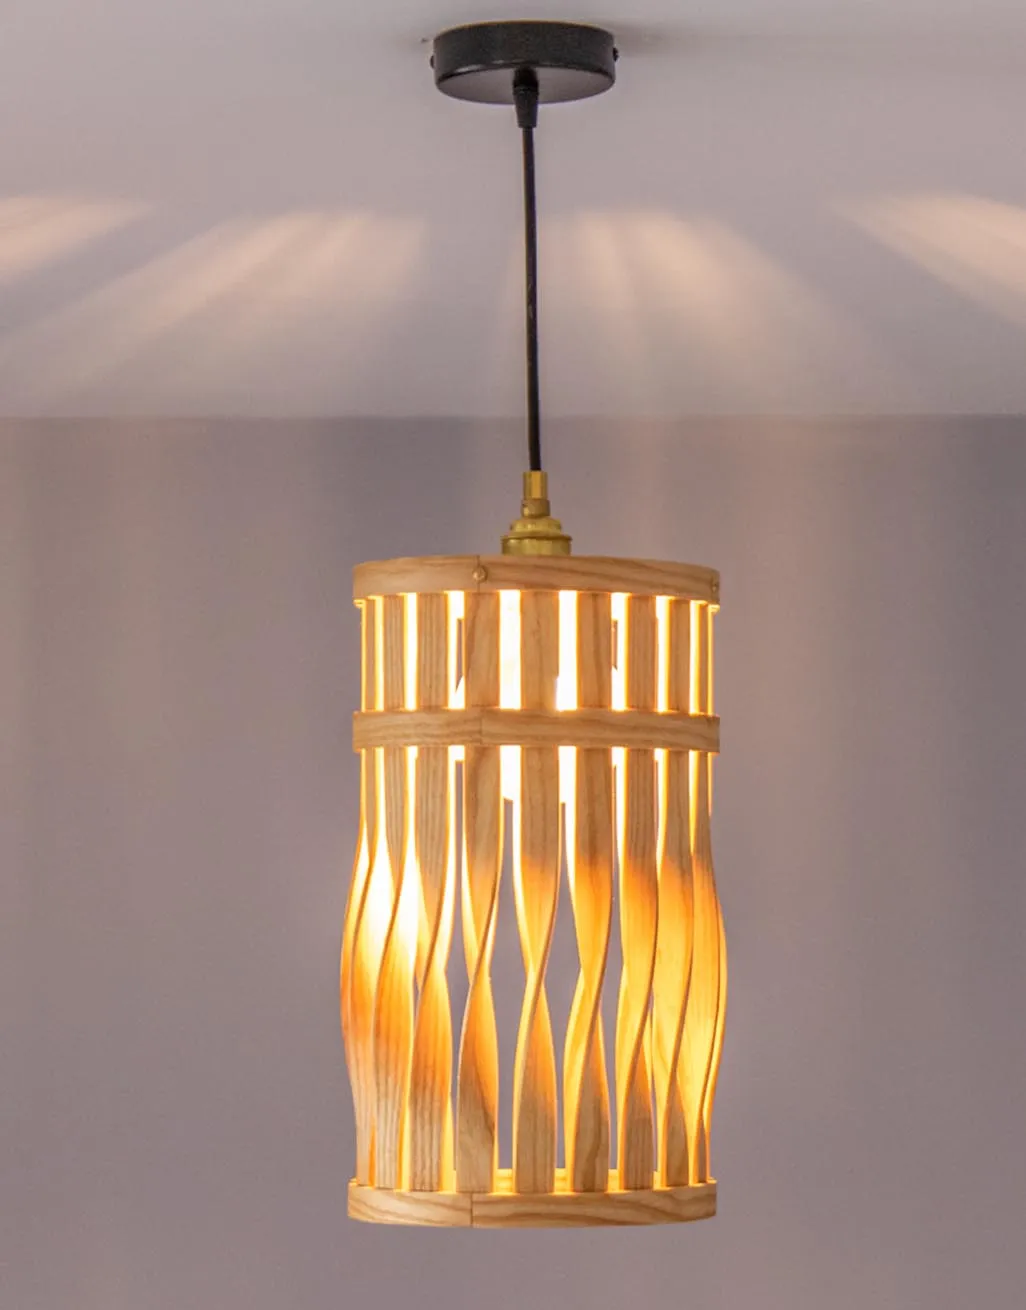 Fabbri Wooden Steam Bent Lamp Shade Light On